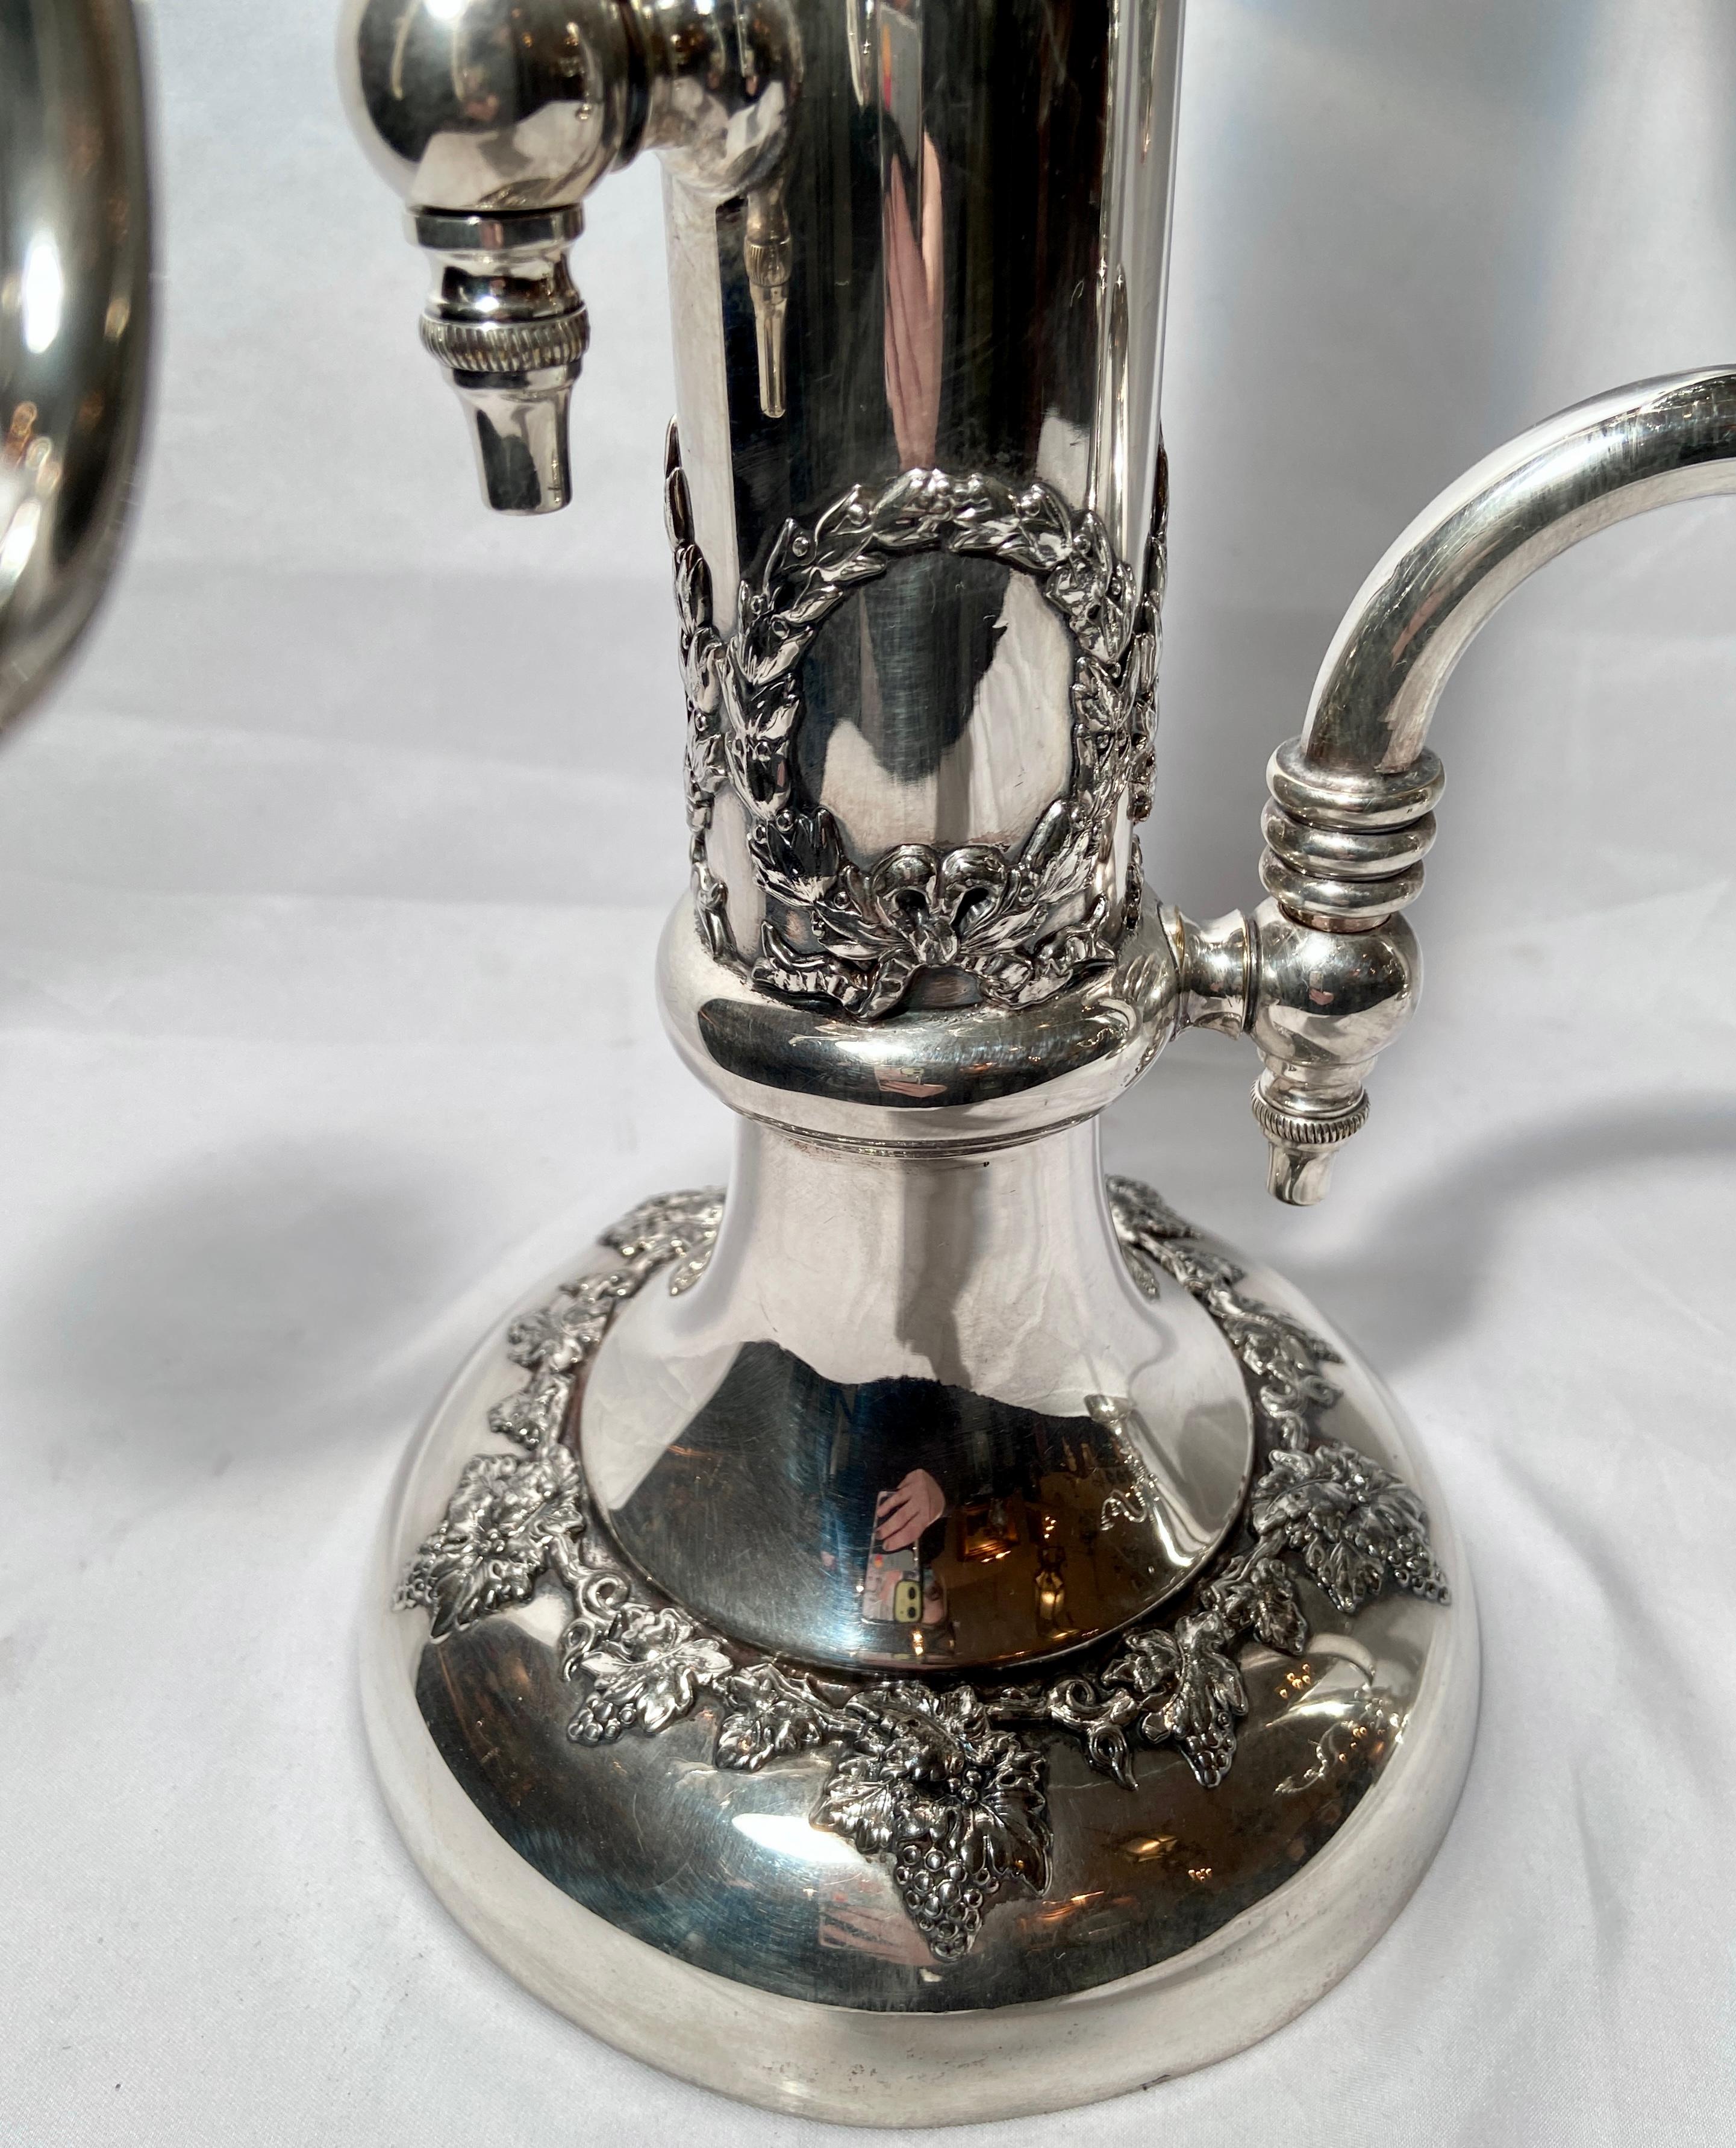 Antique American silver-plated coiffeuse mirror and candelabra, Circa 1920-1930.